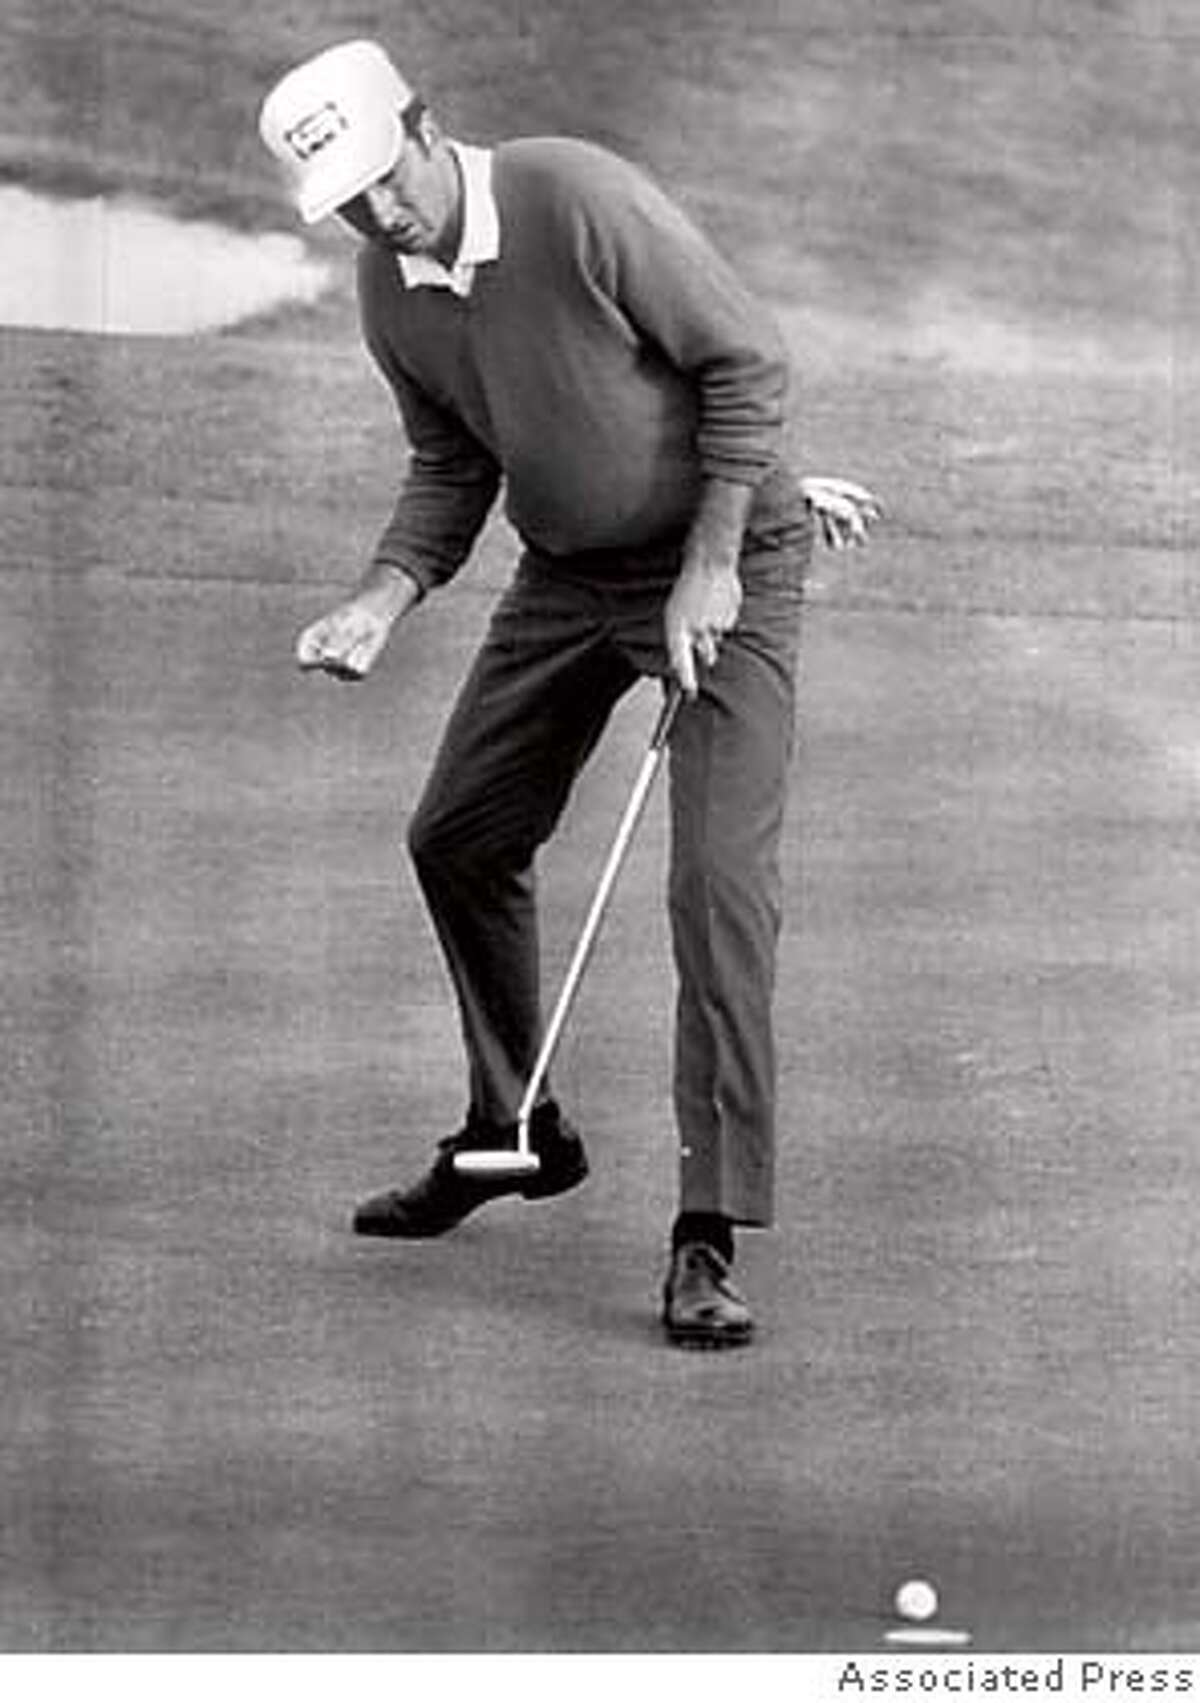 George Archer's birdie putt at 18 is short, in final round of 1969 Masters. Archer one.